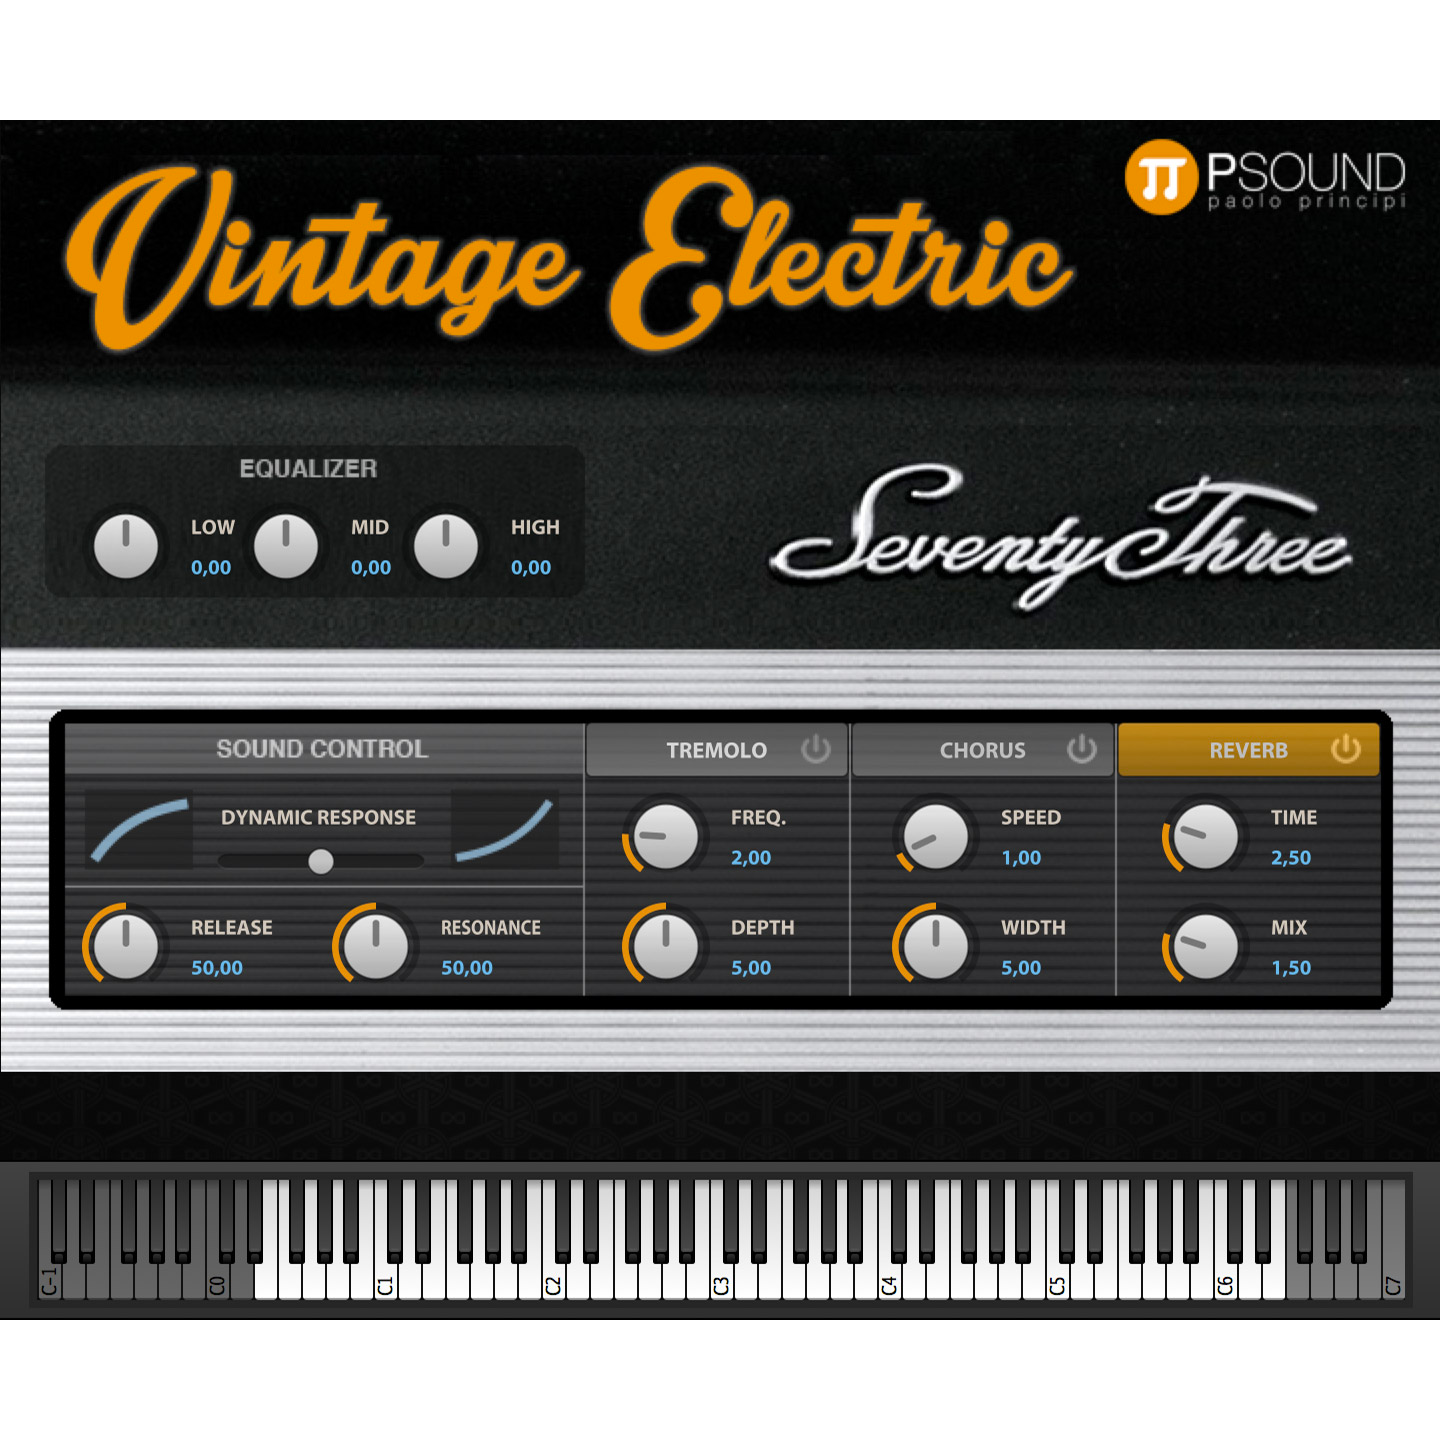 PSound Vintage Electric Virtual Instruments PluginFox